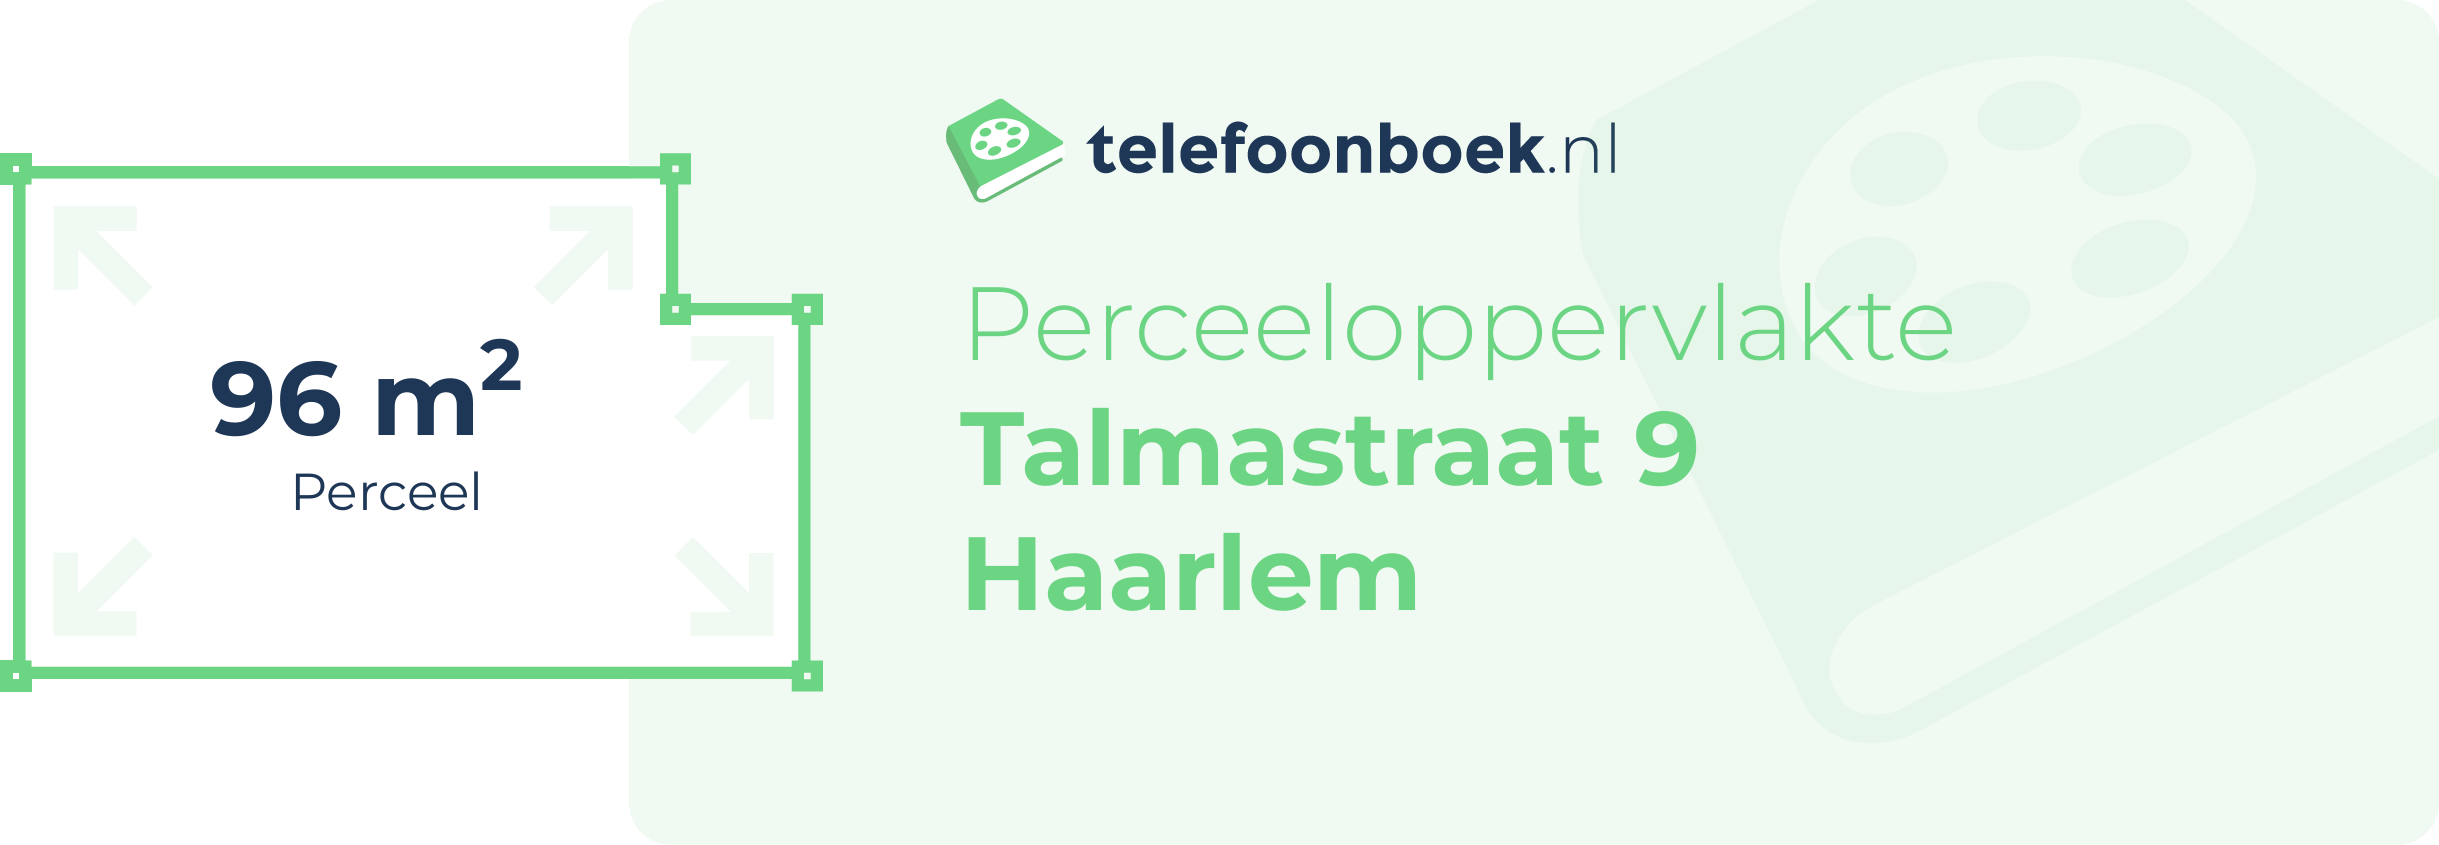 Perceeloppervlakte Talmastraat 9 Haarlem